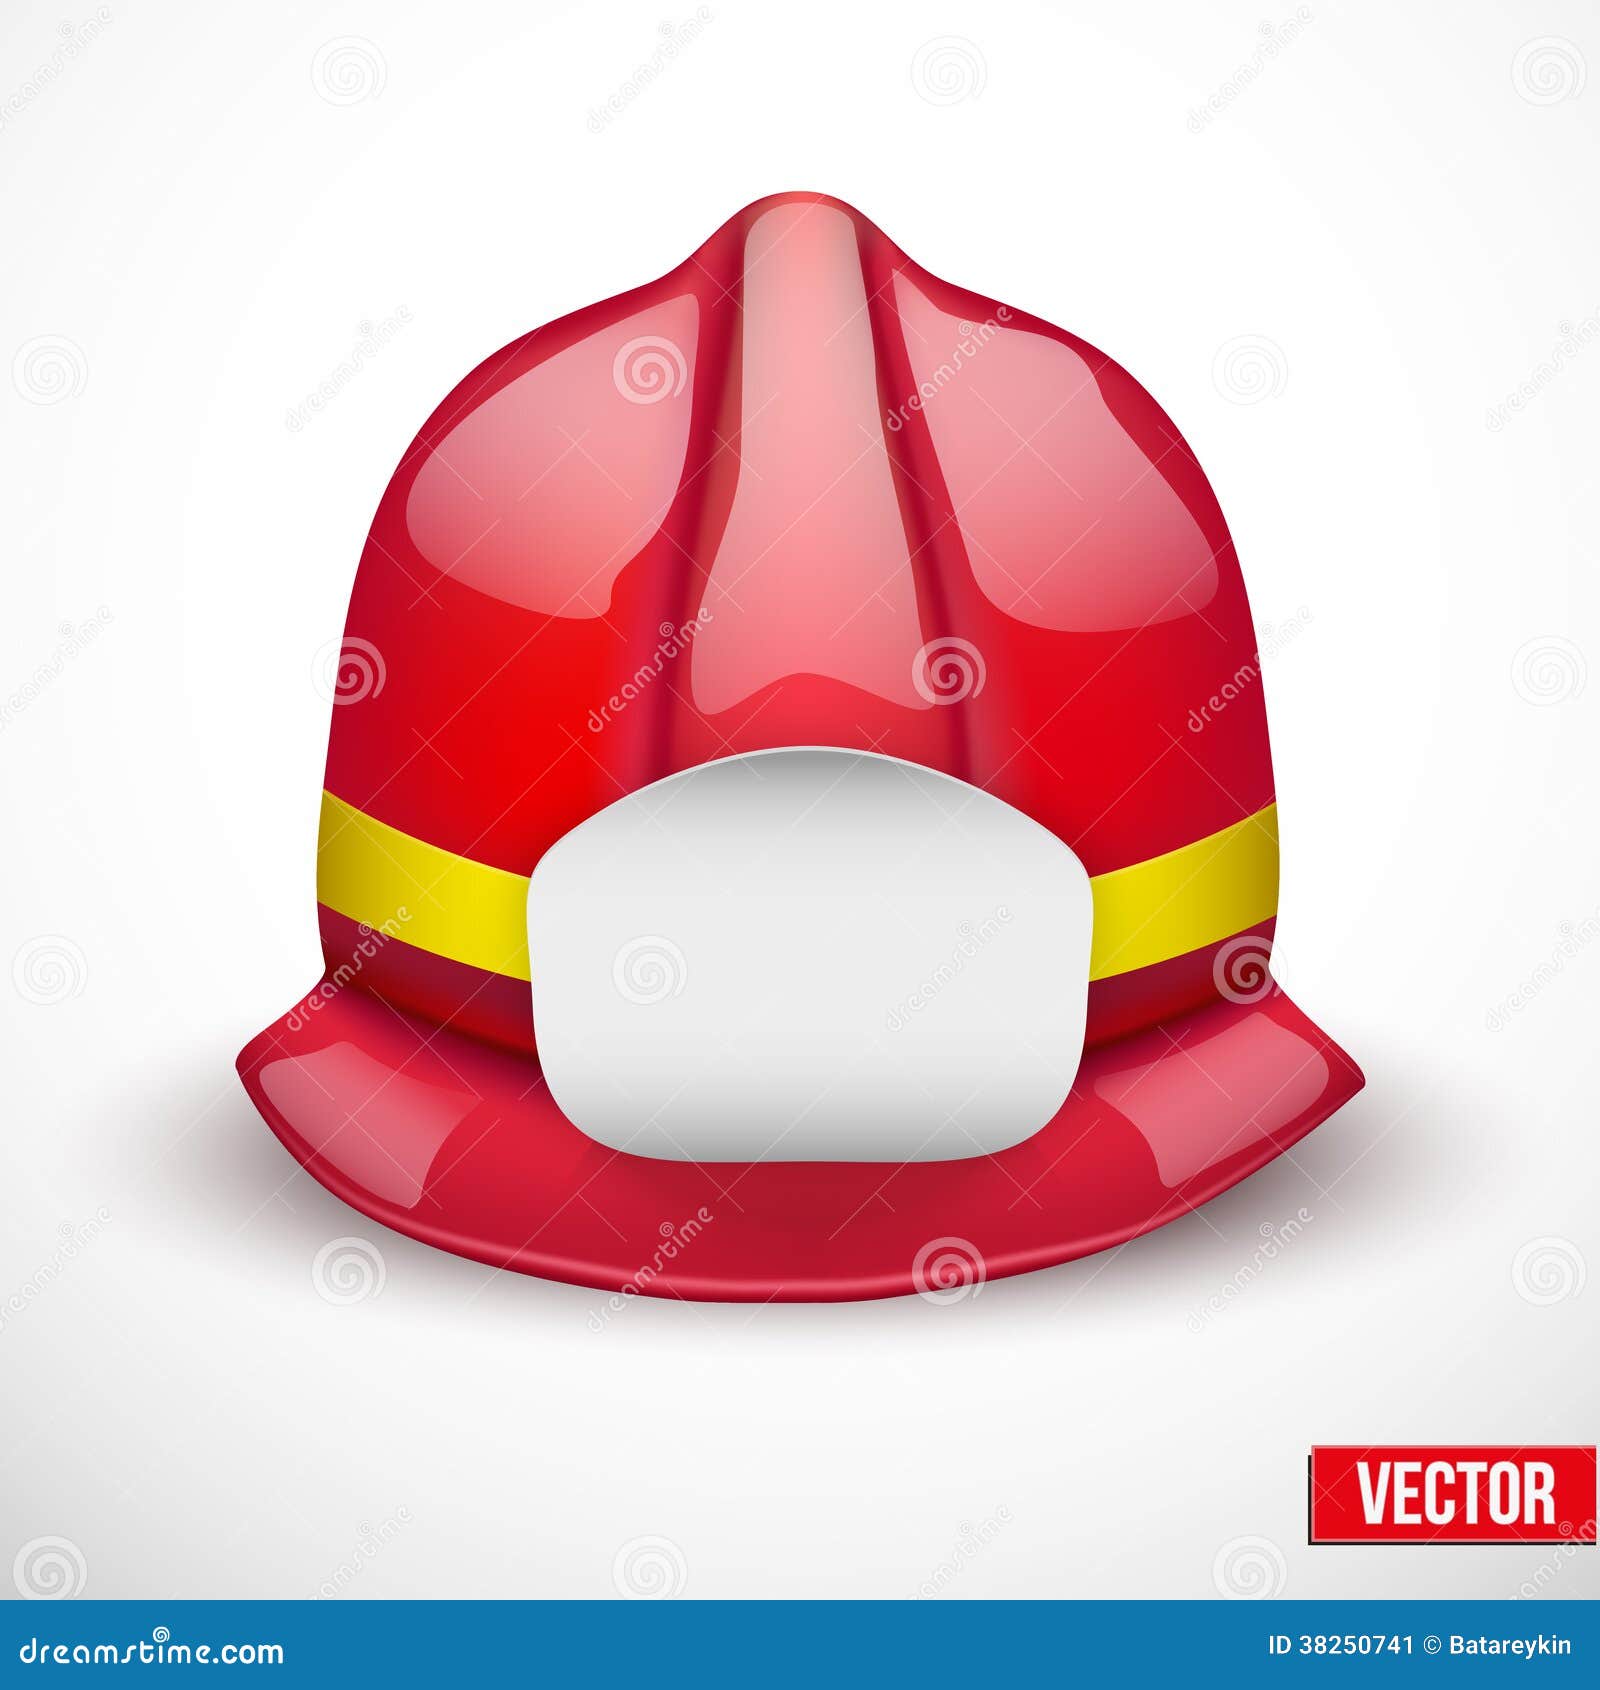 fireman hat clipart - photo #40